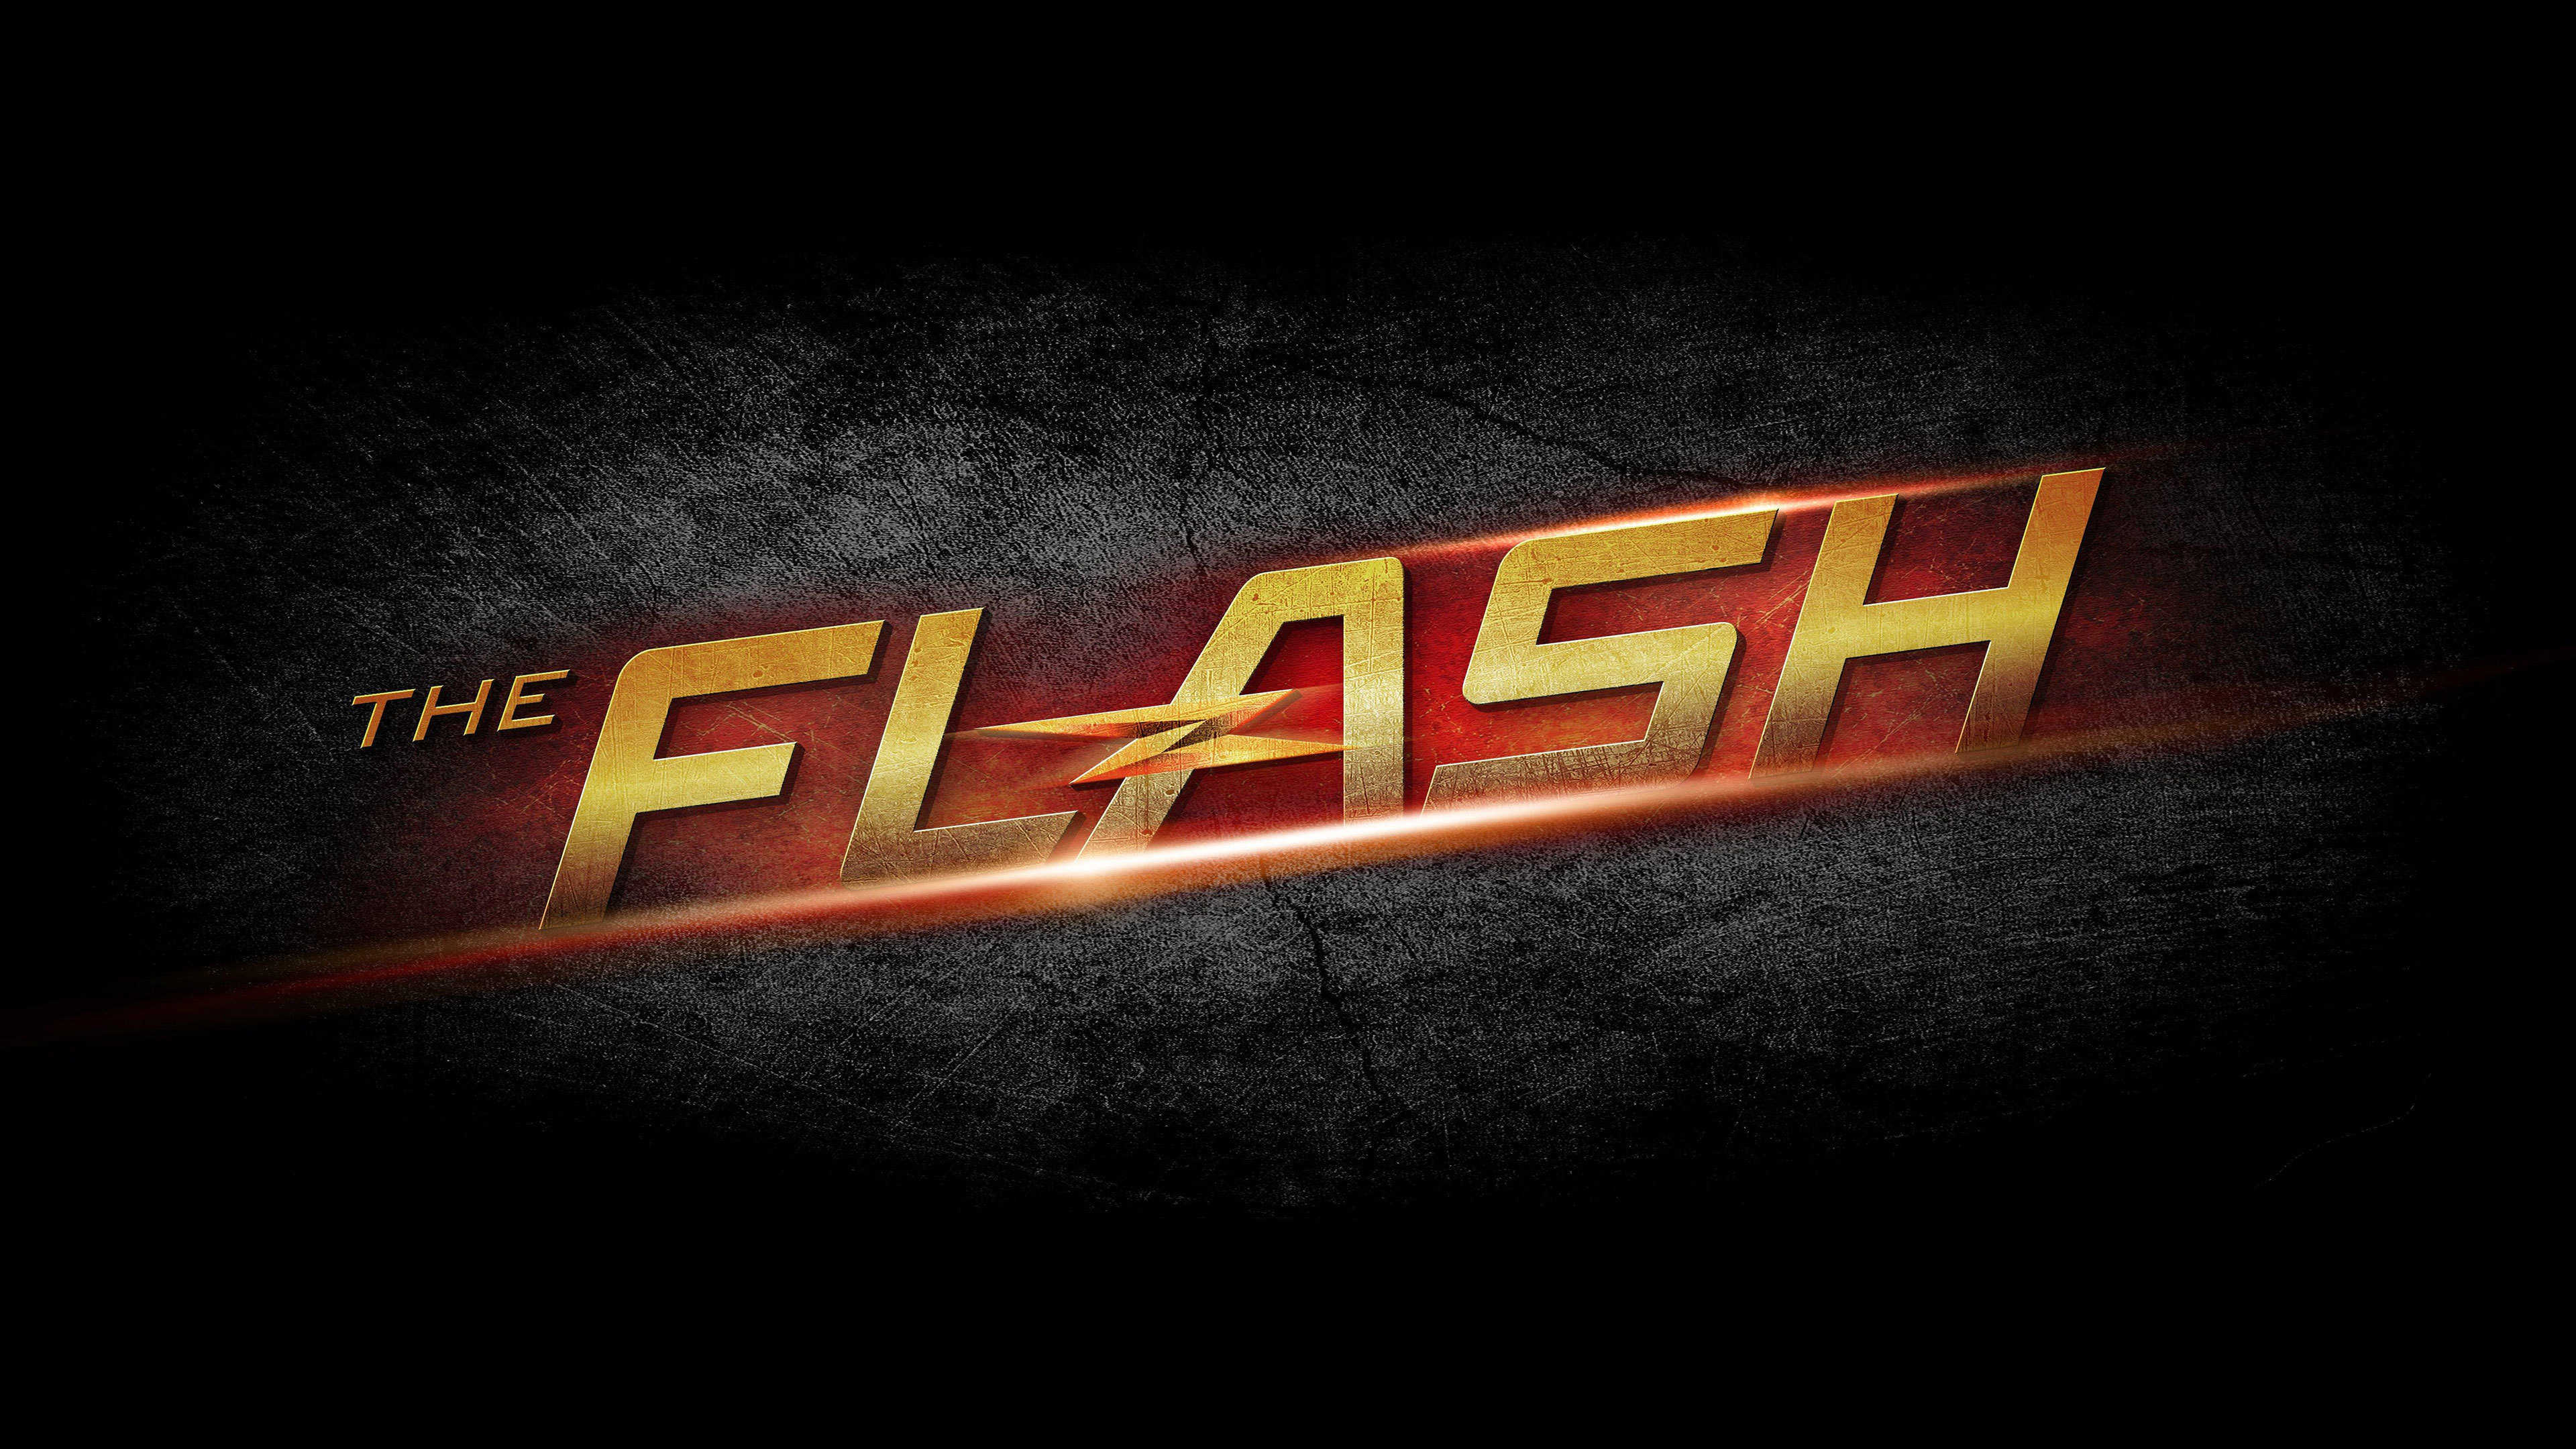 Wallpaper The Flash Logo Desktop Upload At November